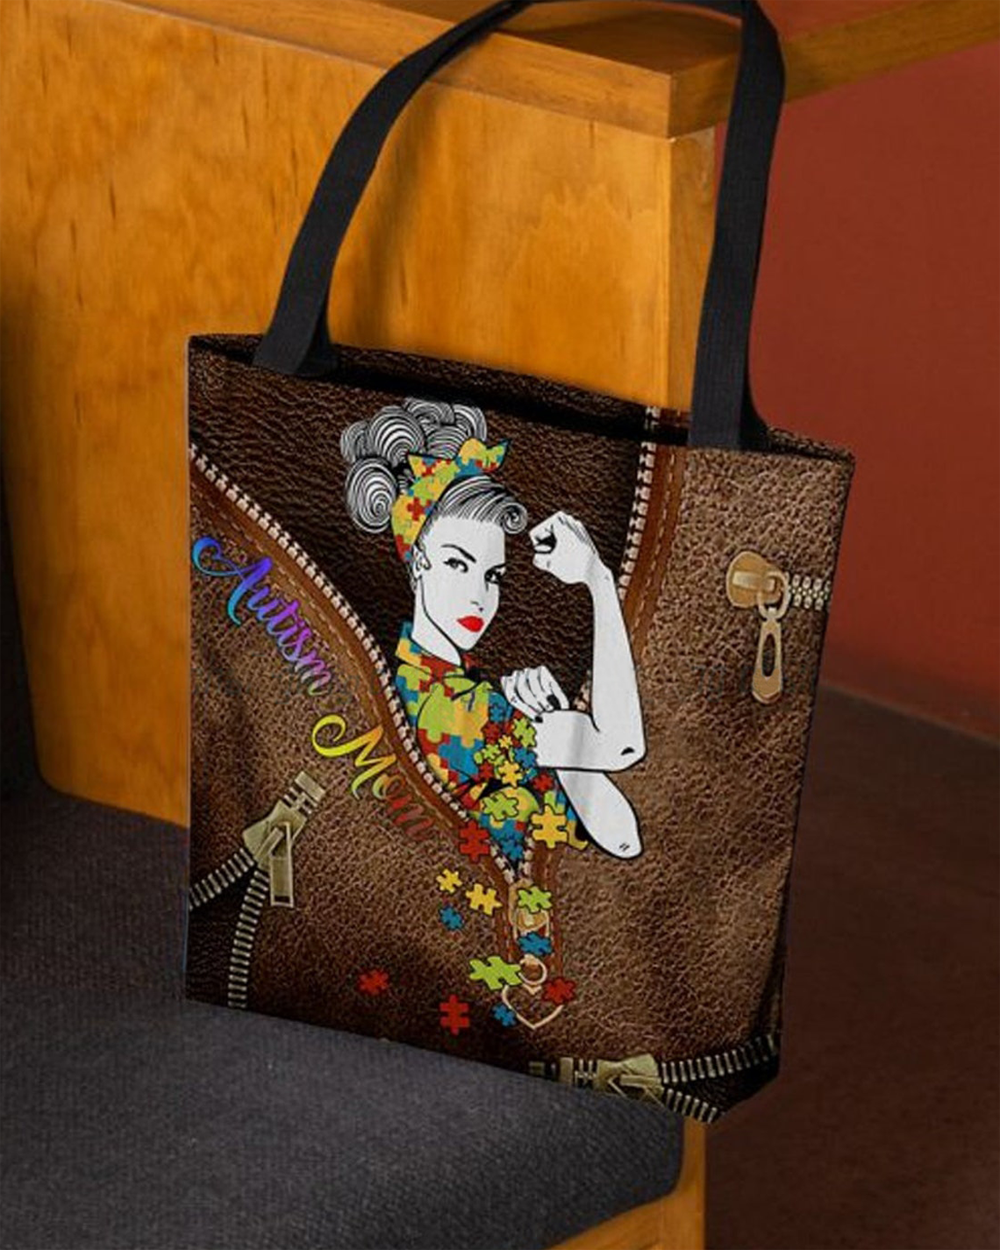 Proud Autism Mom Awareness Purse Tote Bag Handbag For Women PANLTO0044 -  Bestiewisdom